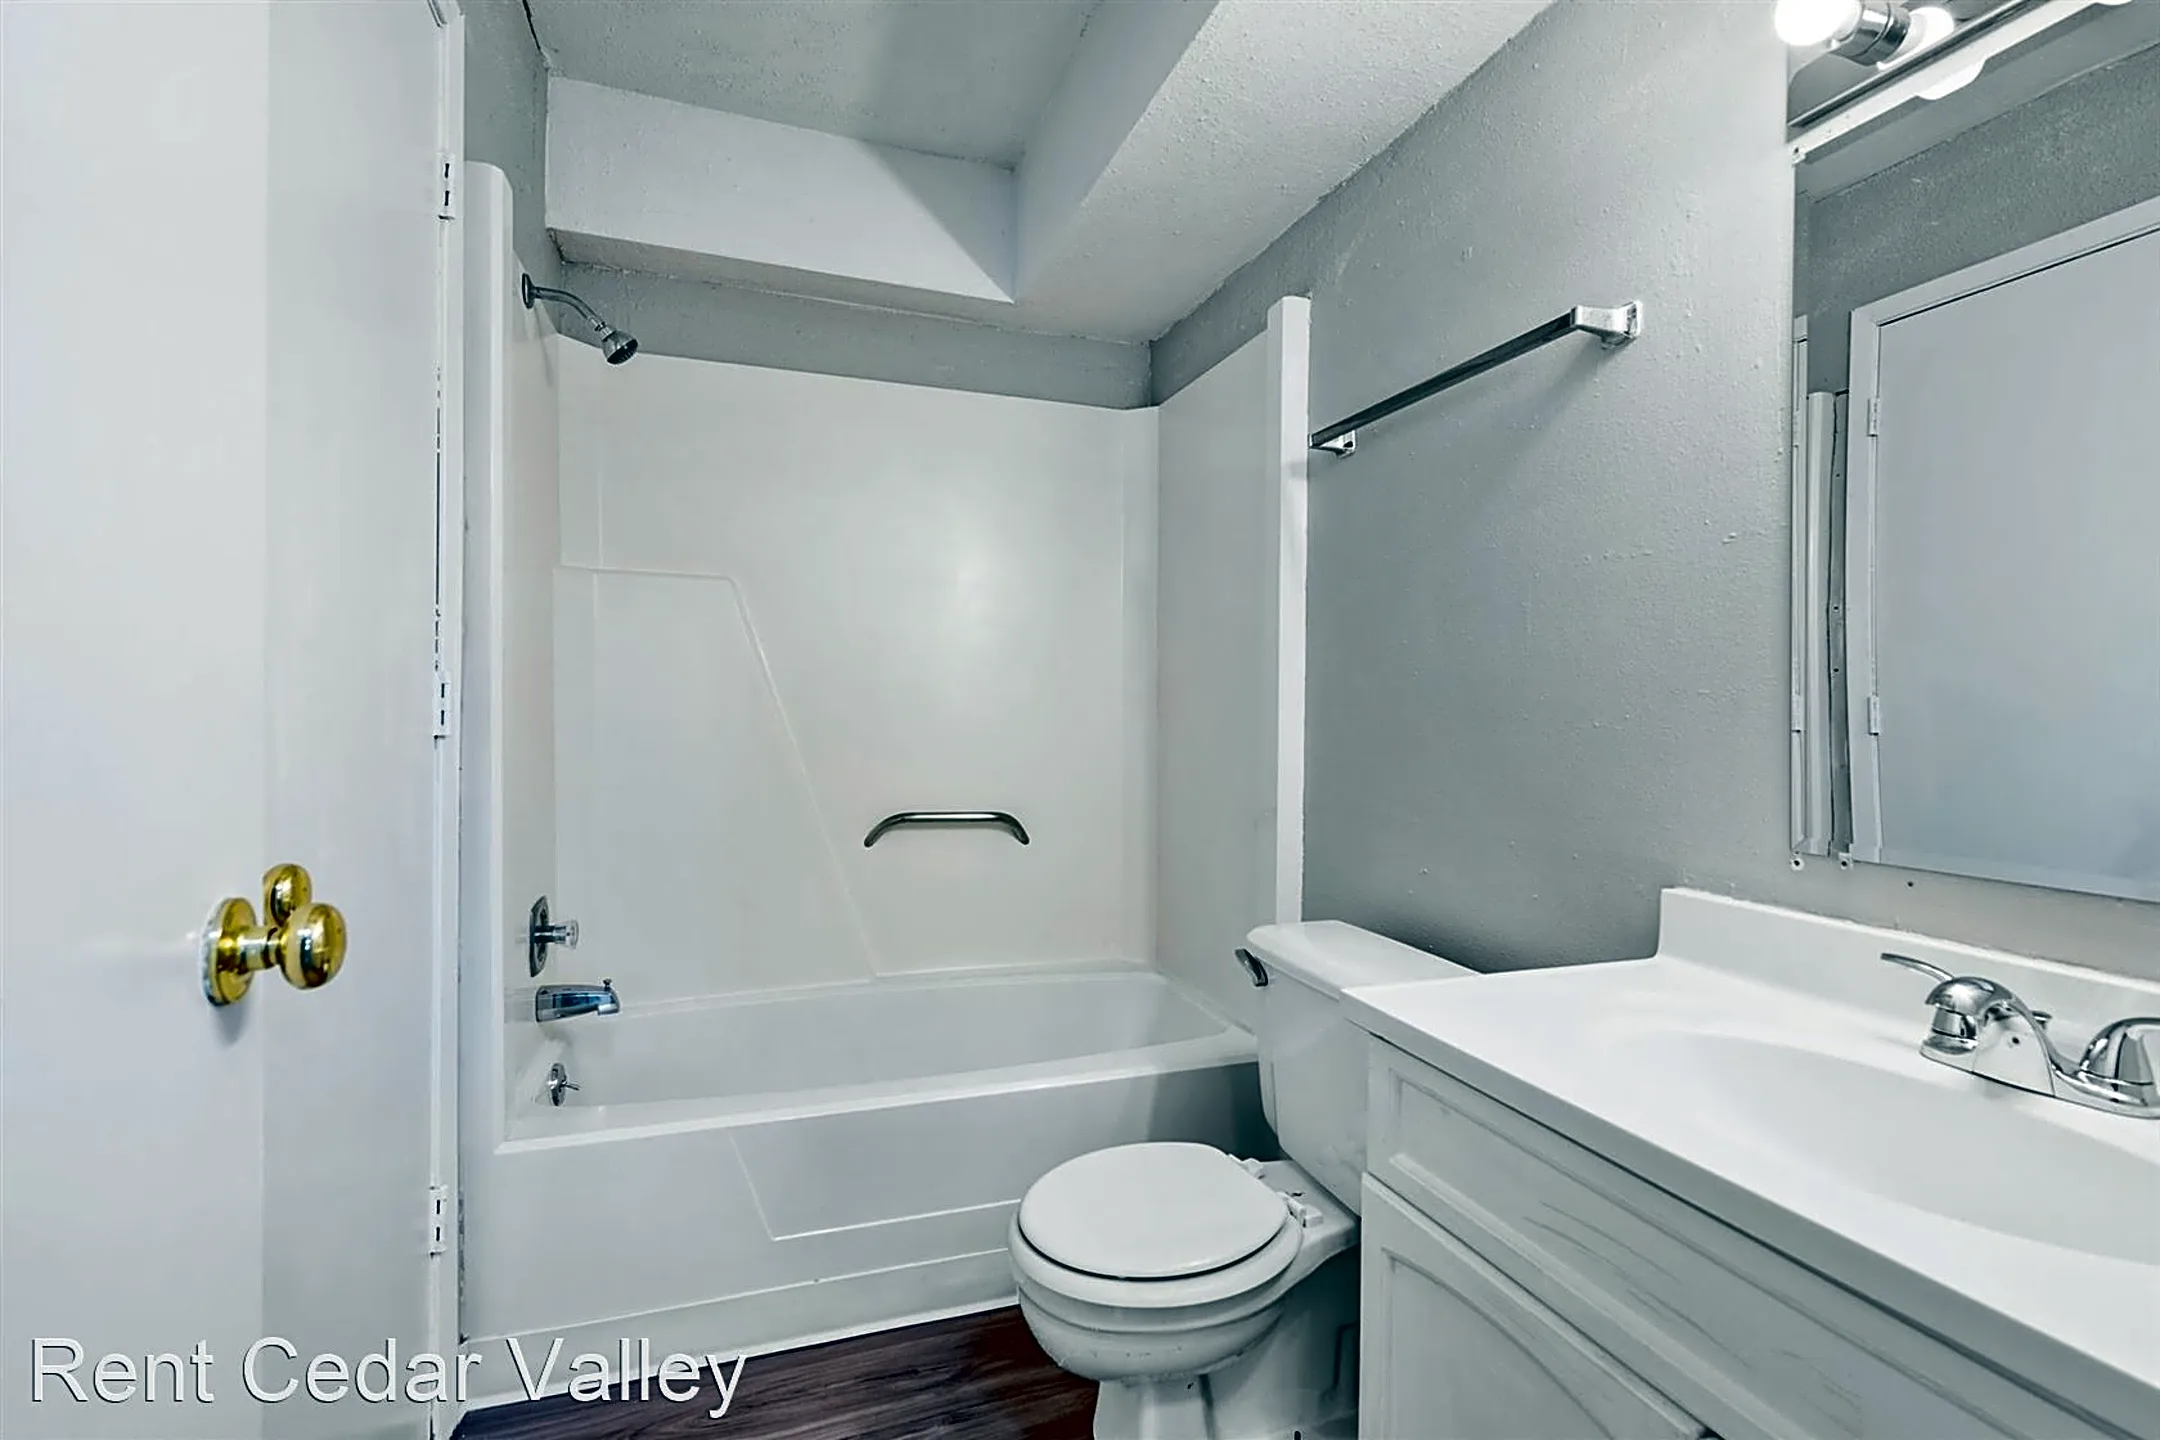 Bathroom - Leavitt Park Apartments - Building 1008 - Waterloo, IA